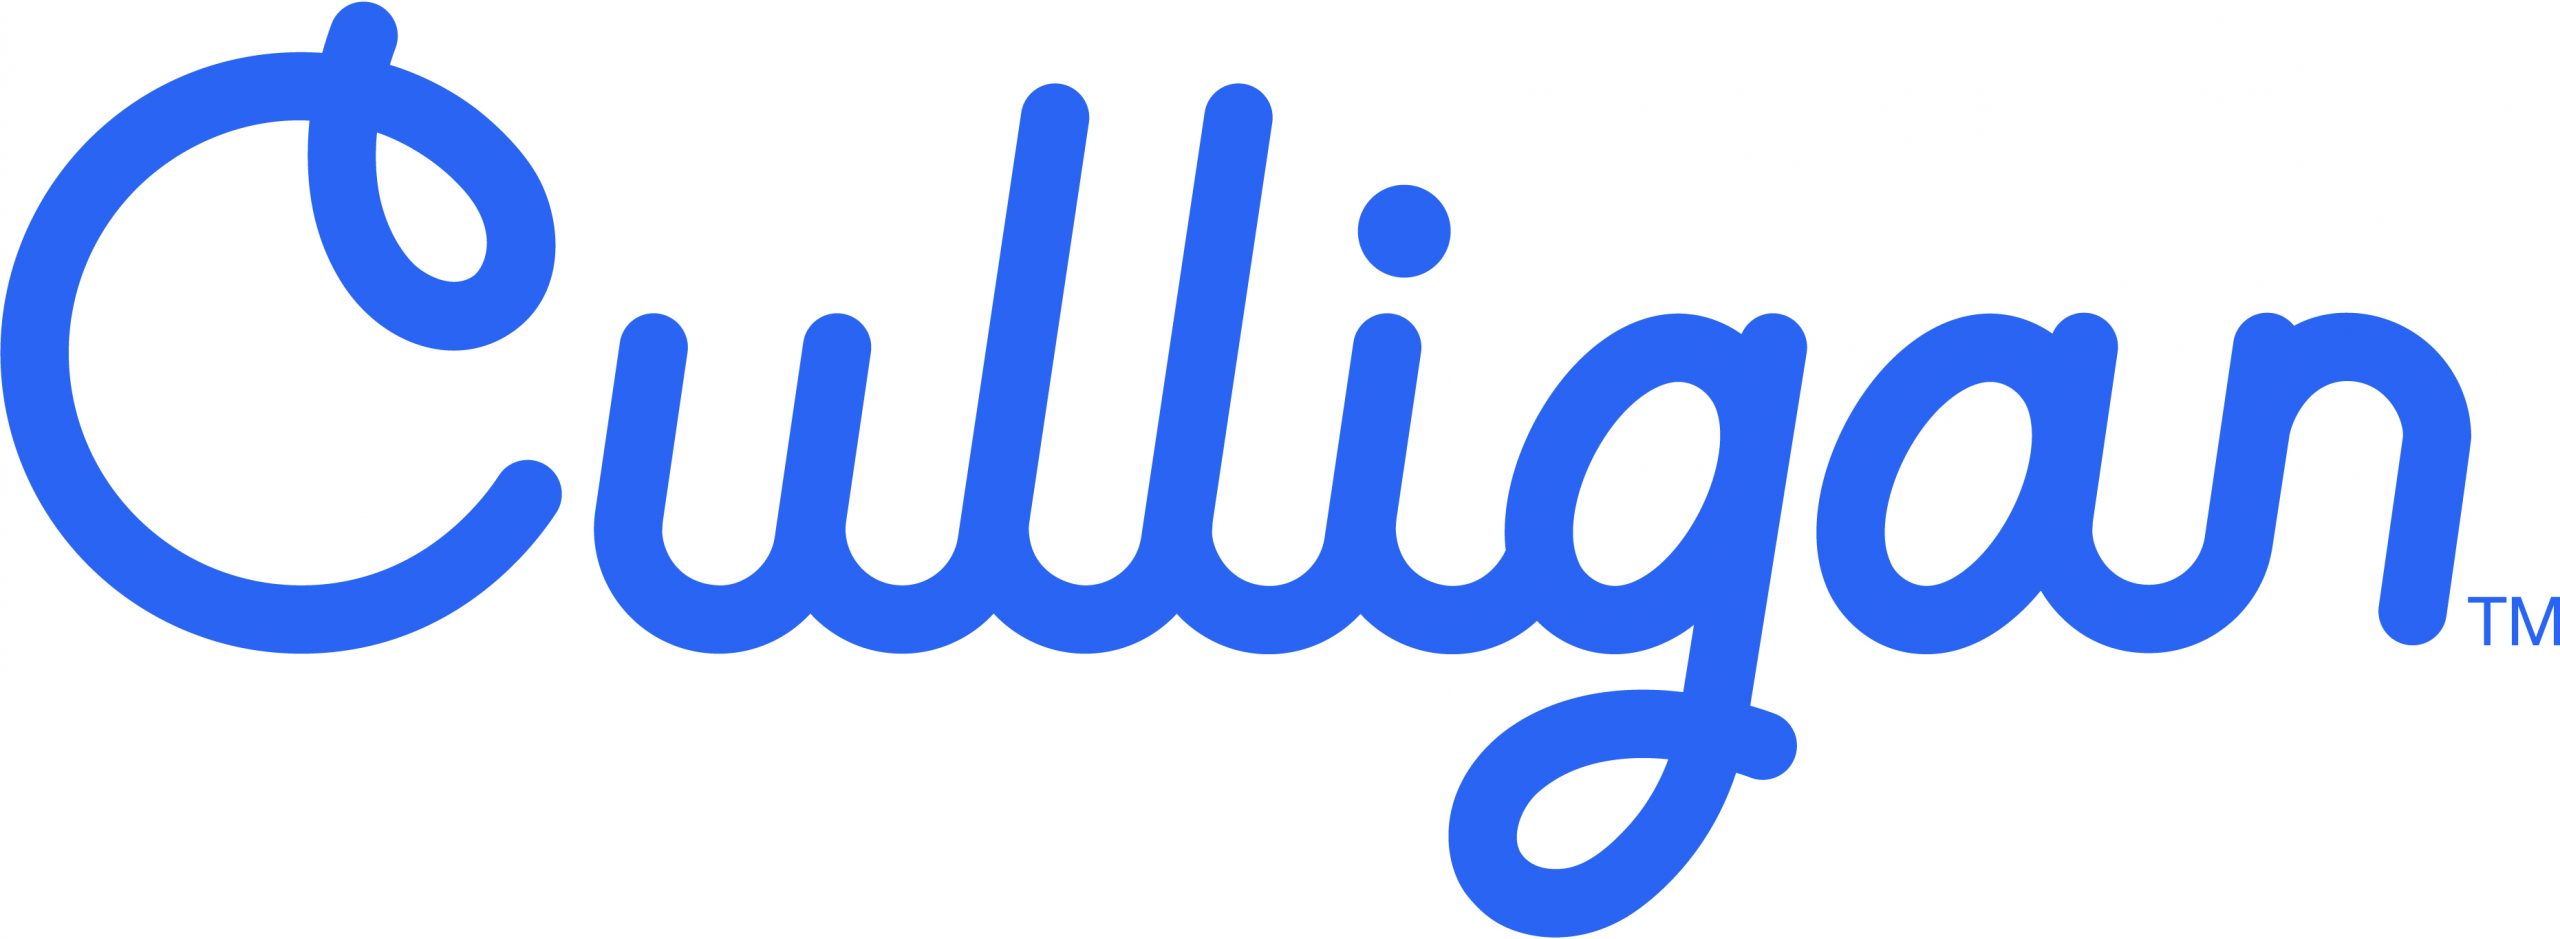 Highs-Carroll Logo